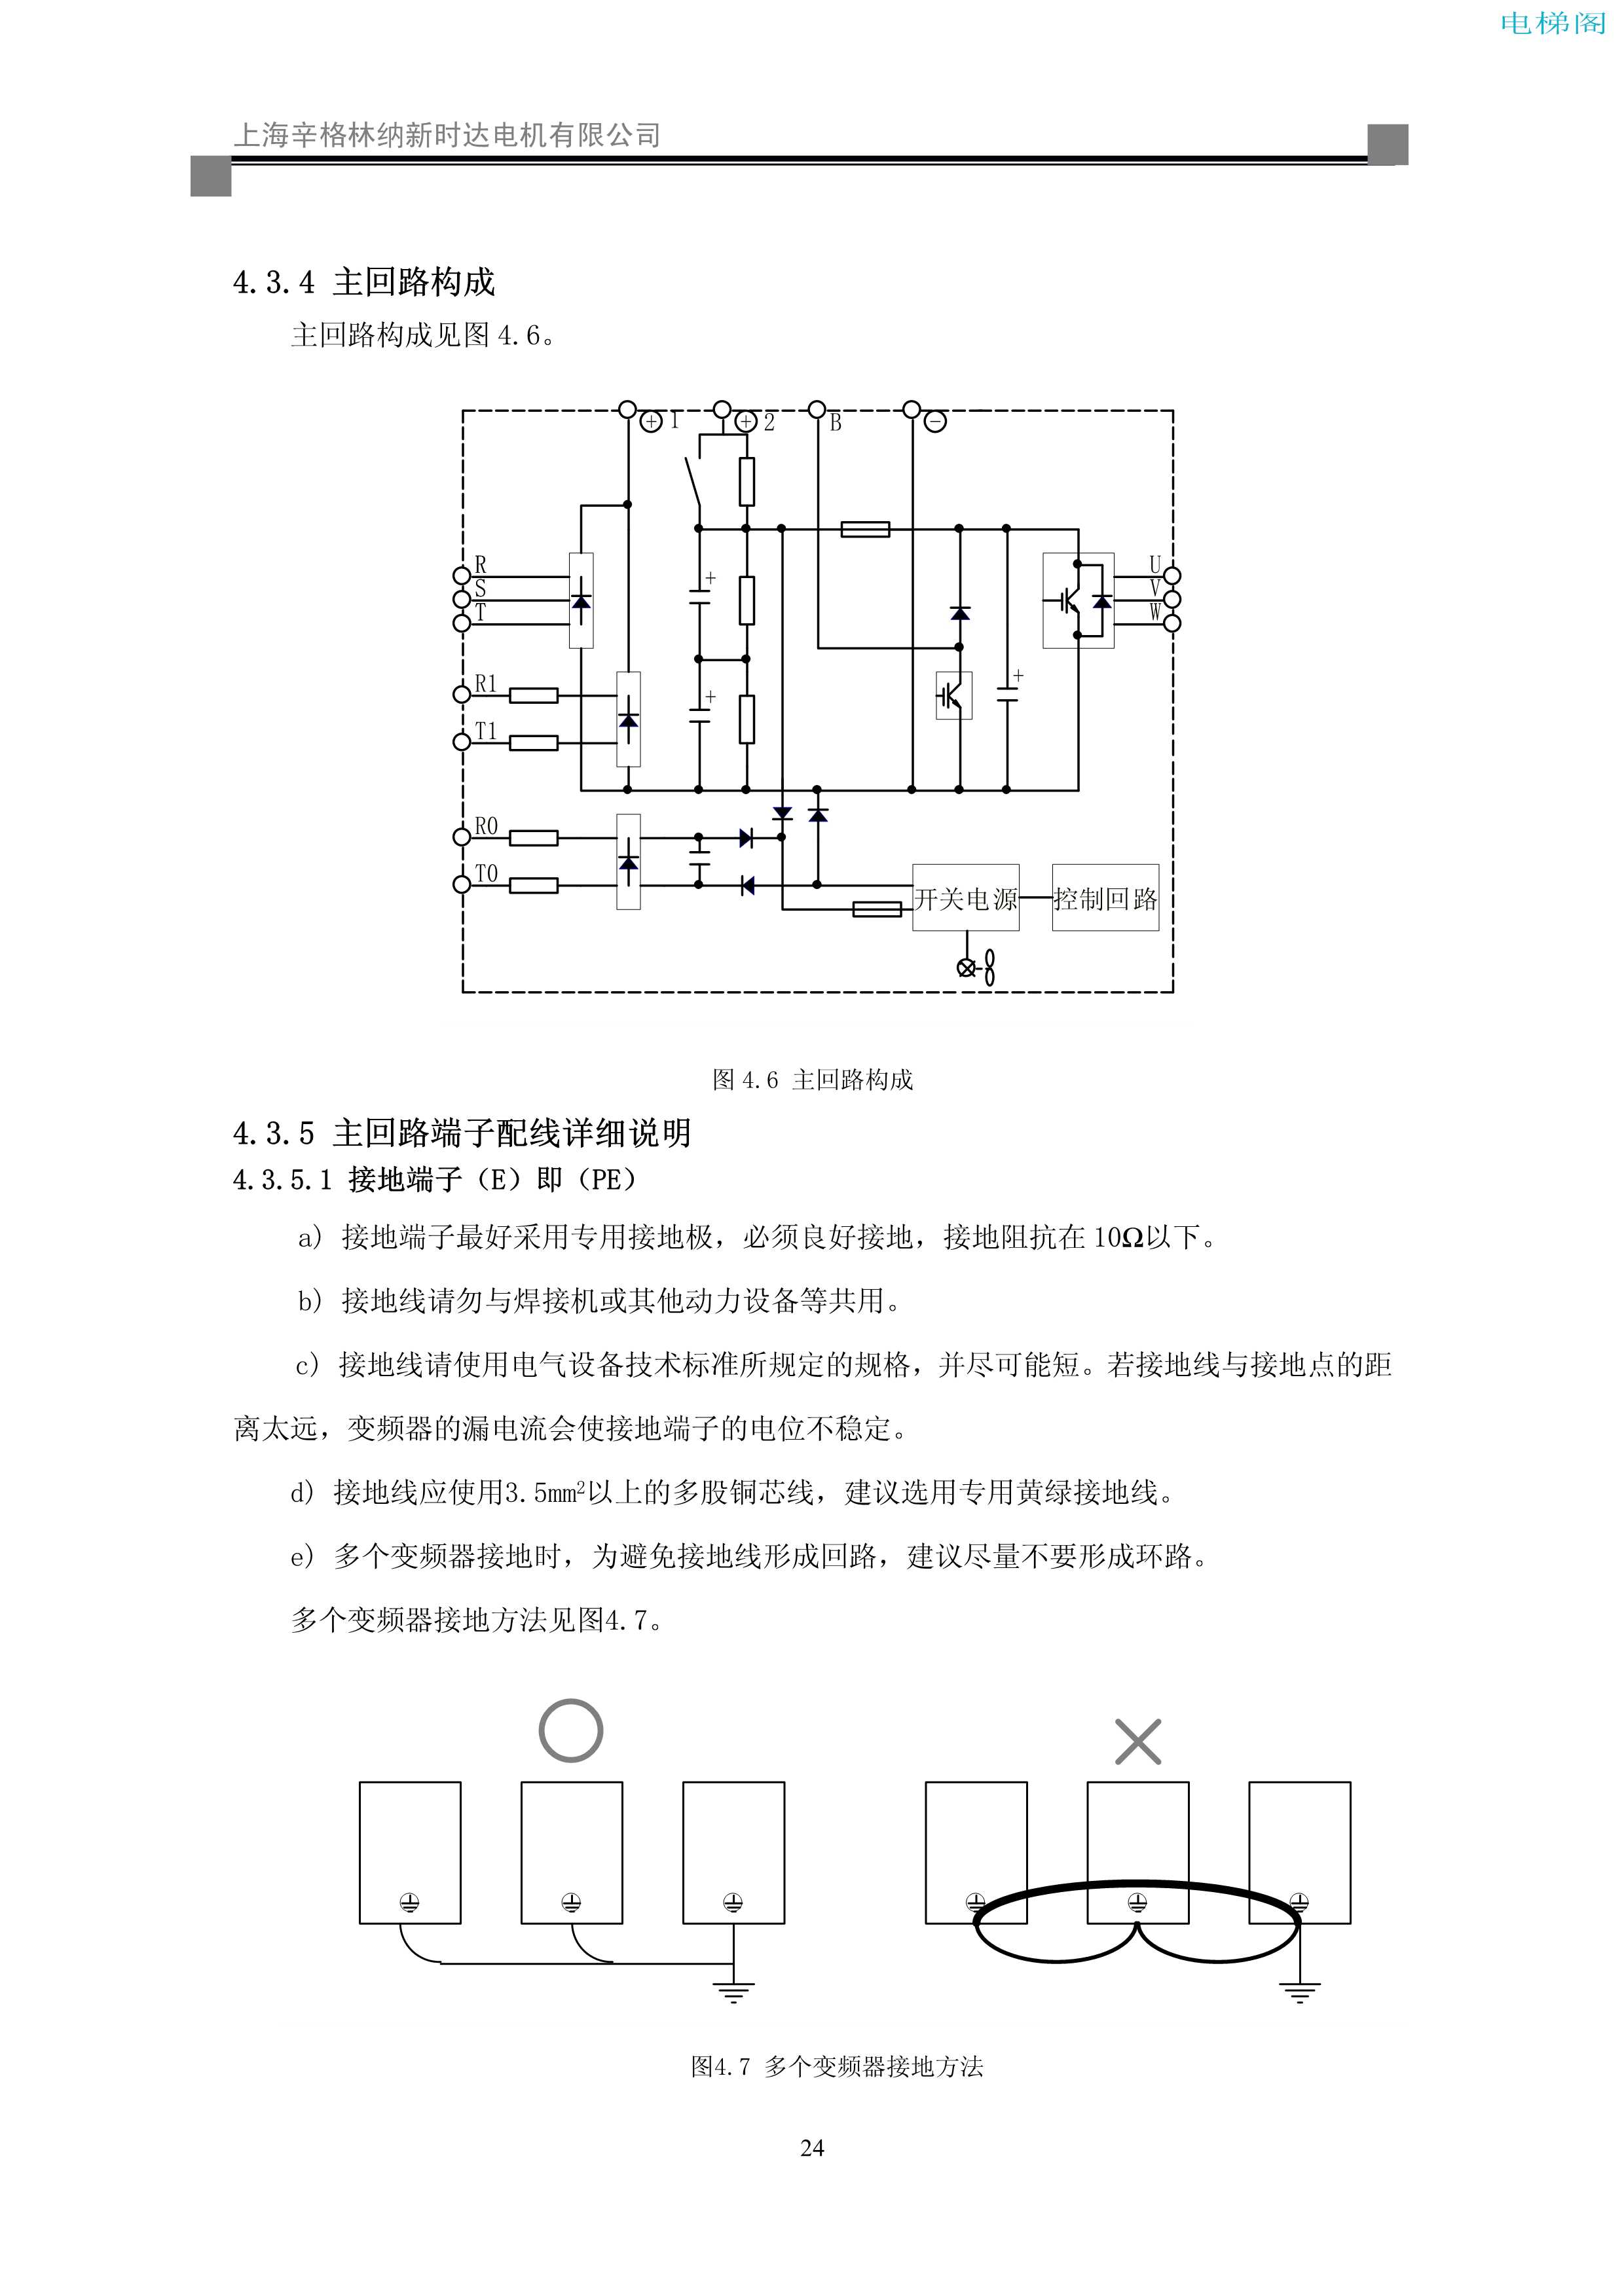 iAStar-S3系列电梯专用变频器使用说明书-9(V2[1].03)_32.jpg